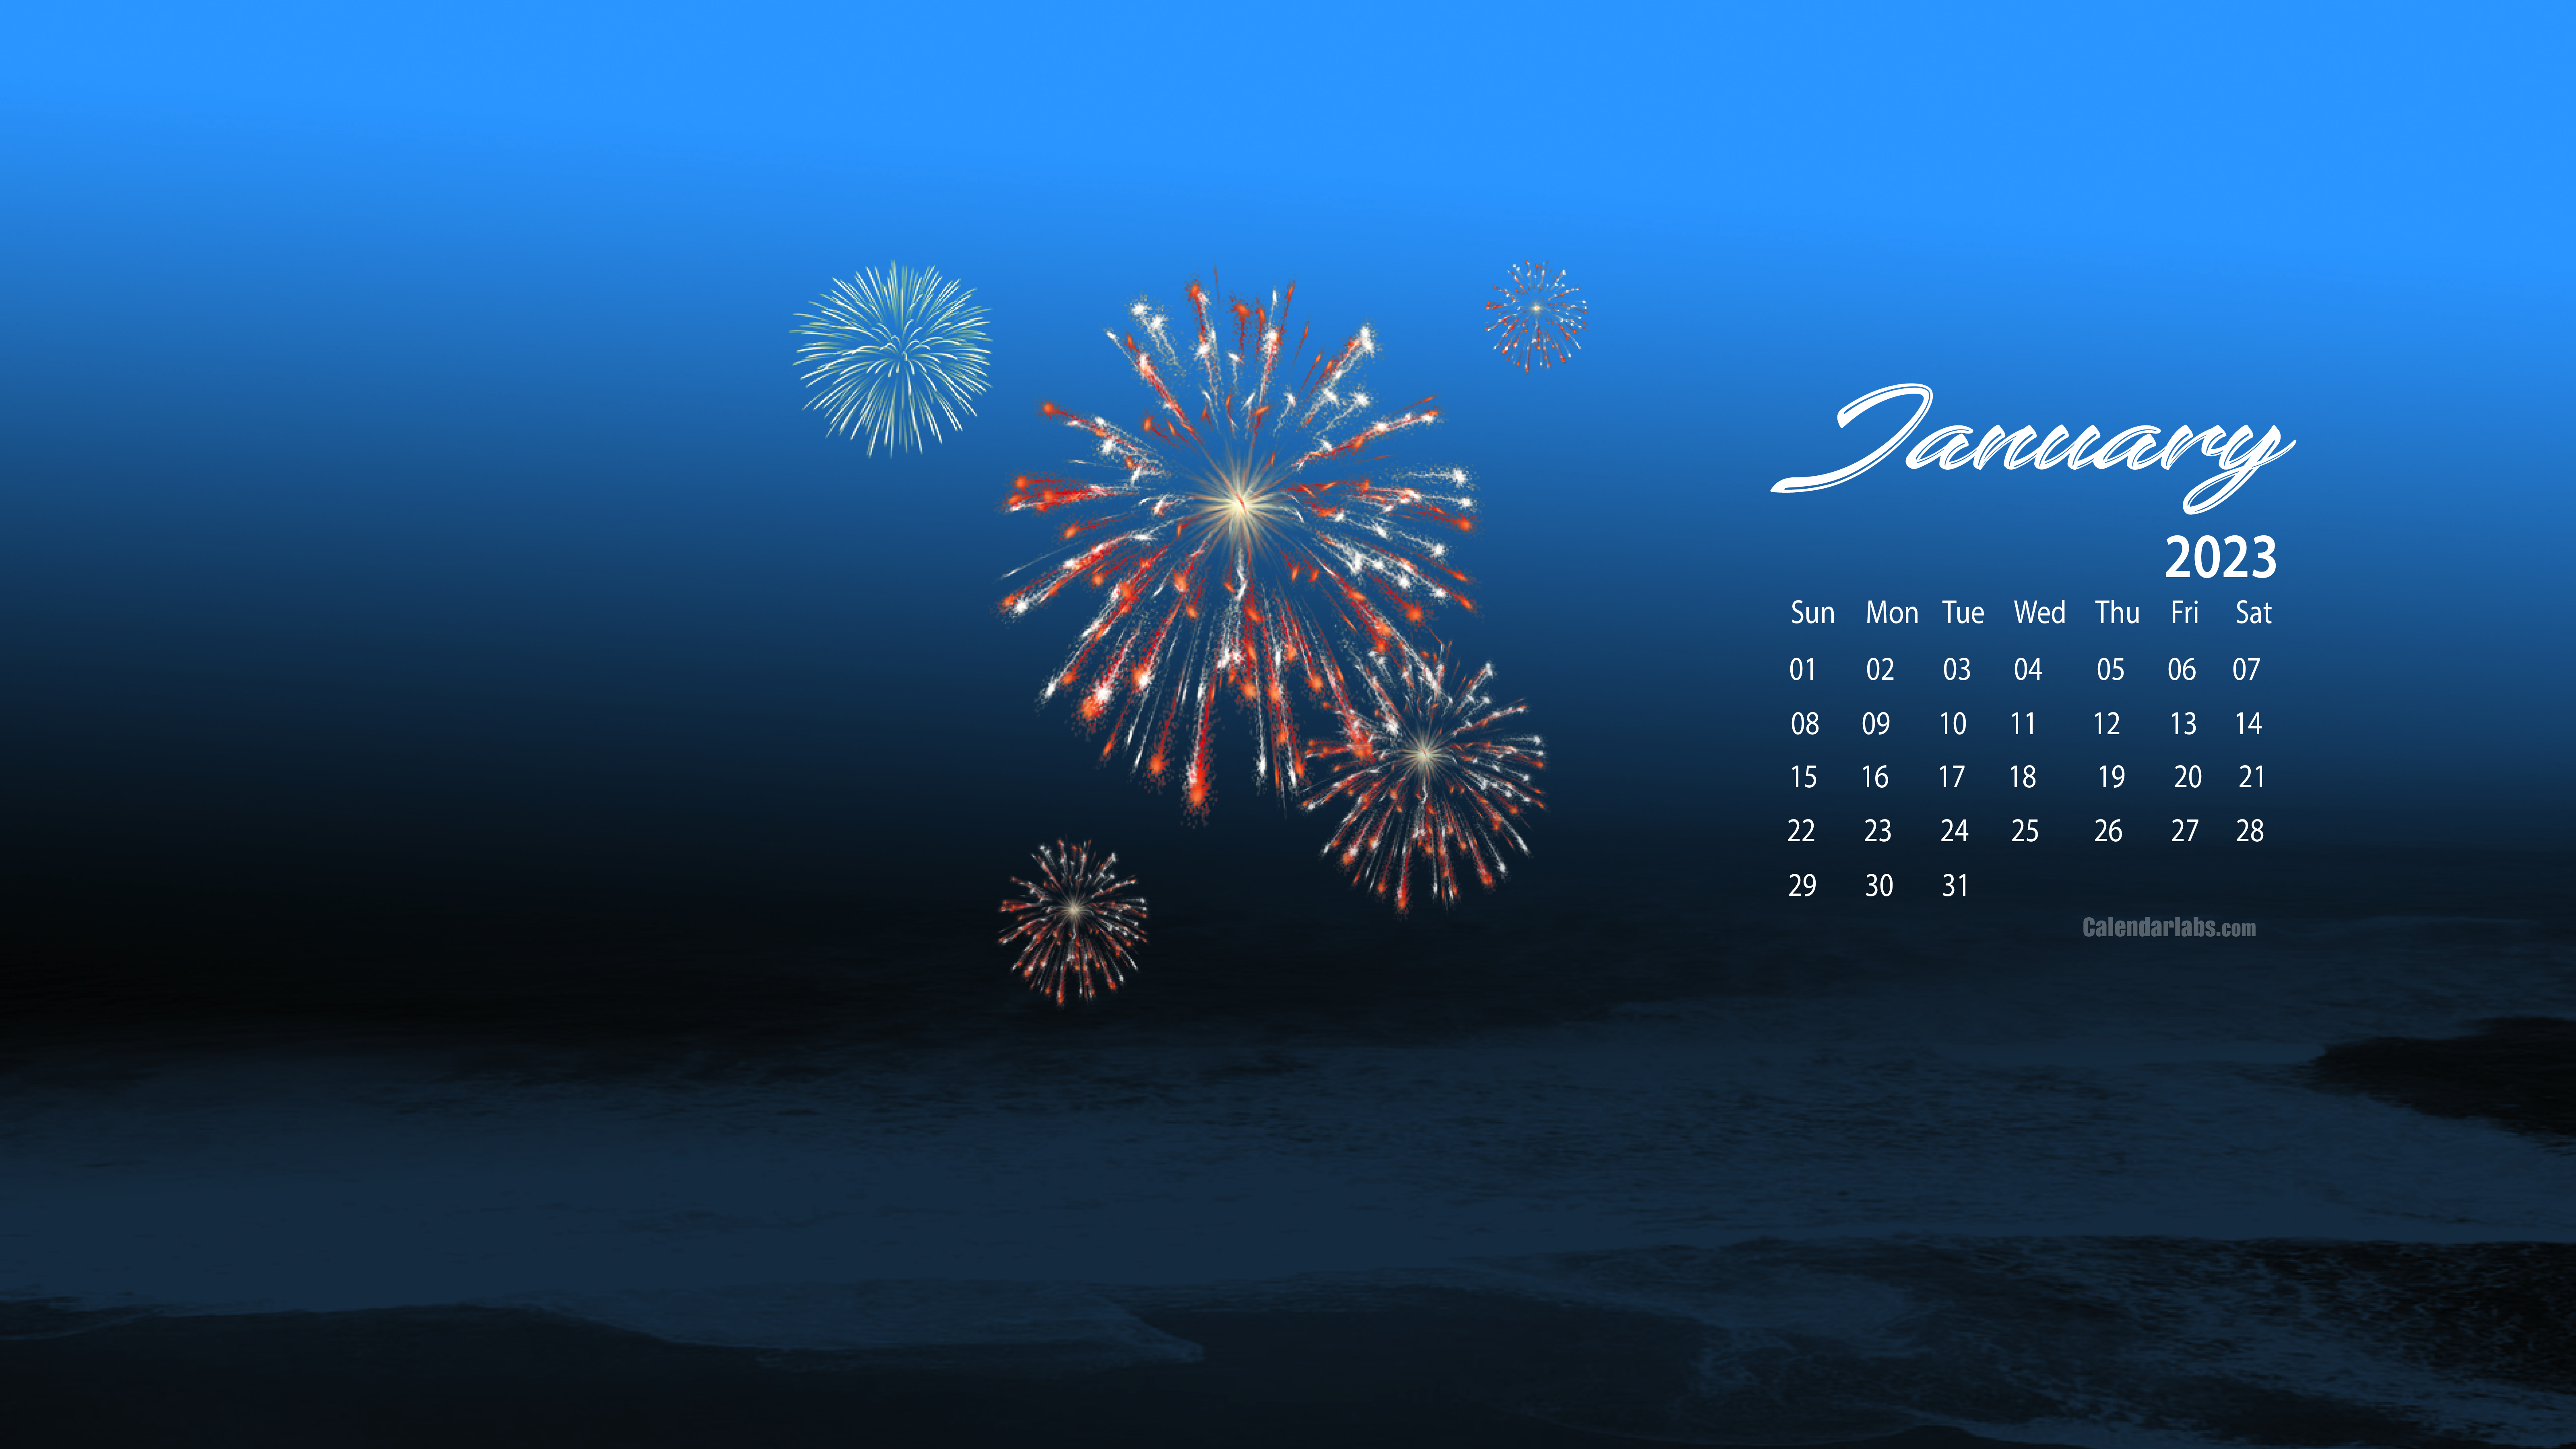 January 2023 Desktop Wallpapers Calendar